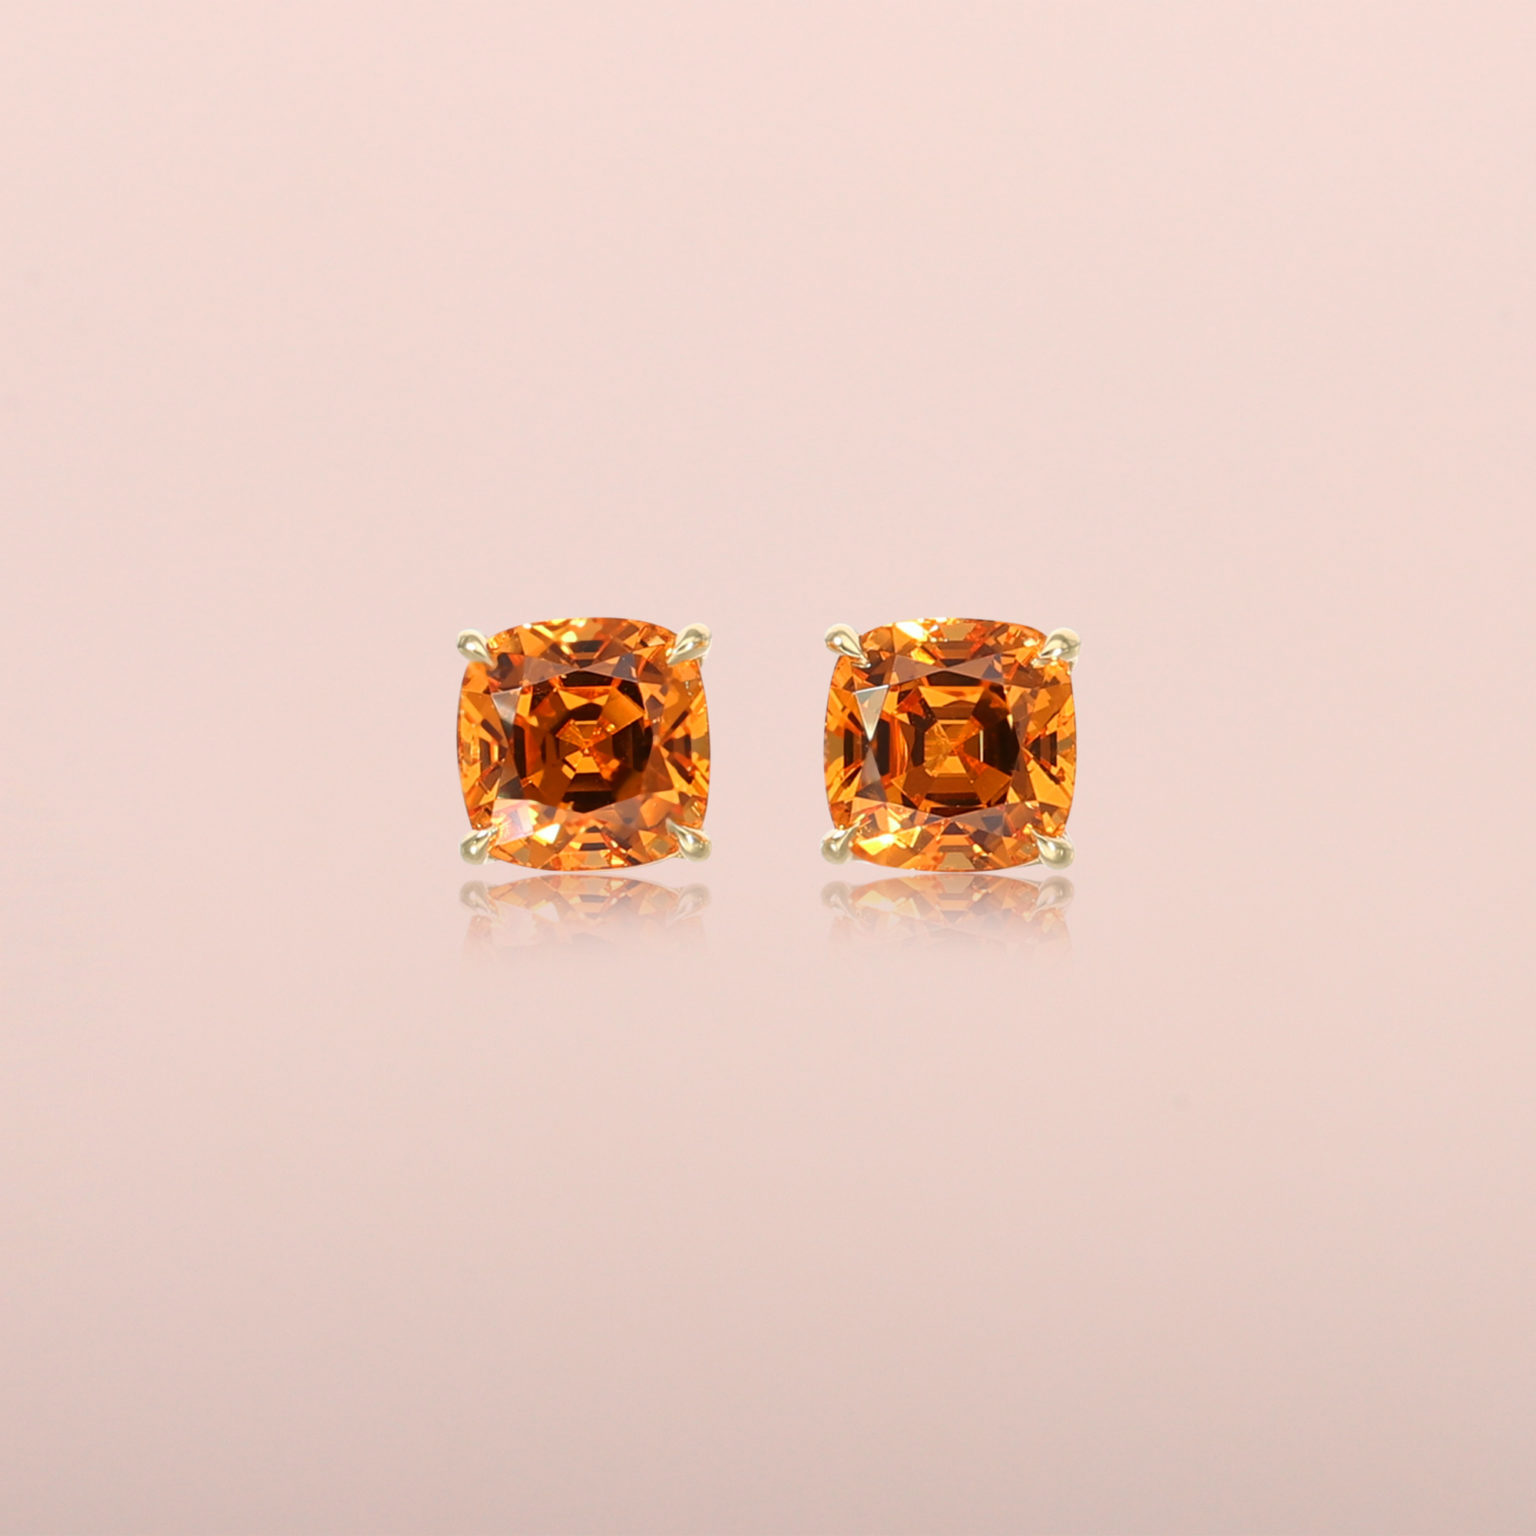 Mandarin Garnet Earring Studs